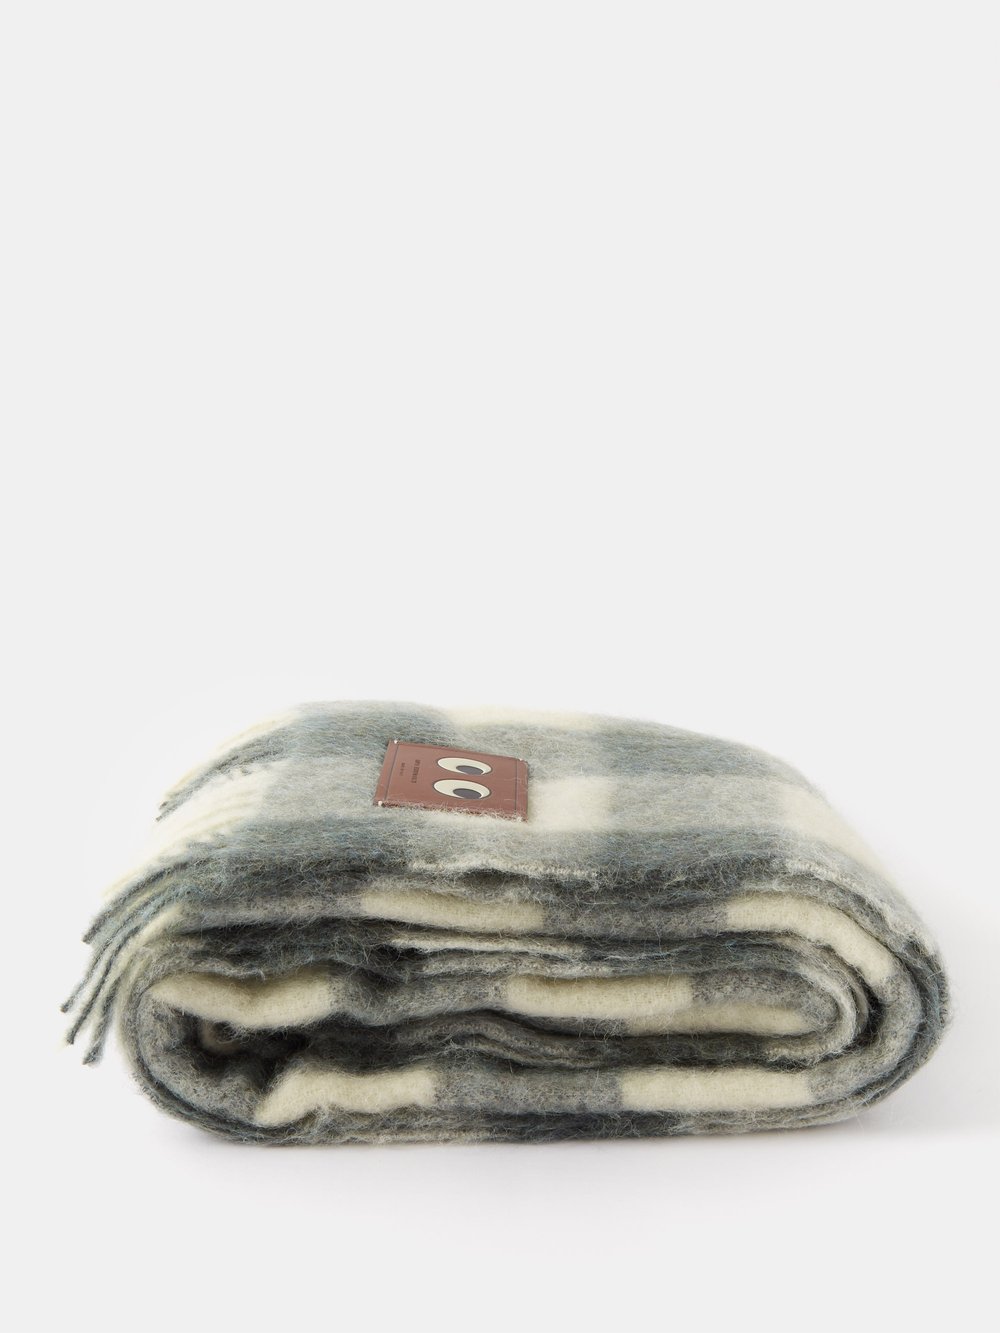 Одеяло из ткани альпаки eyes в мелкую клетку Anya Hindmarch, серый